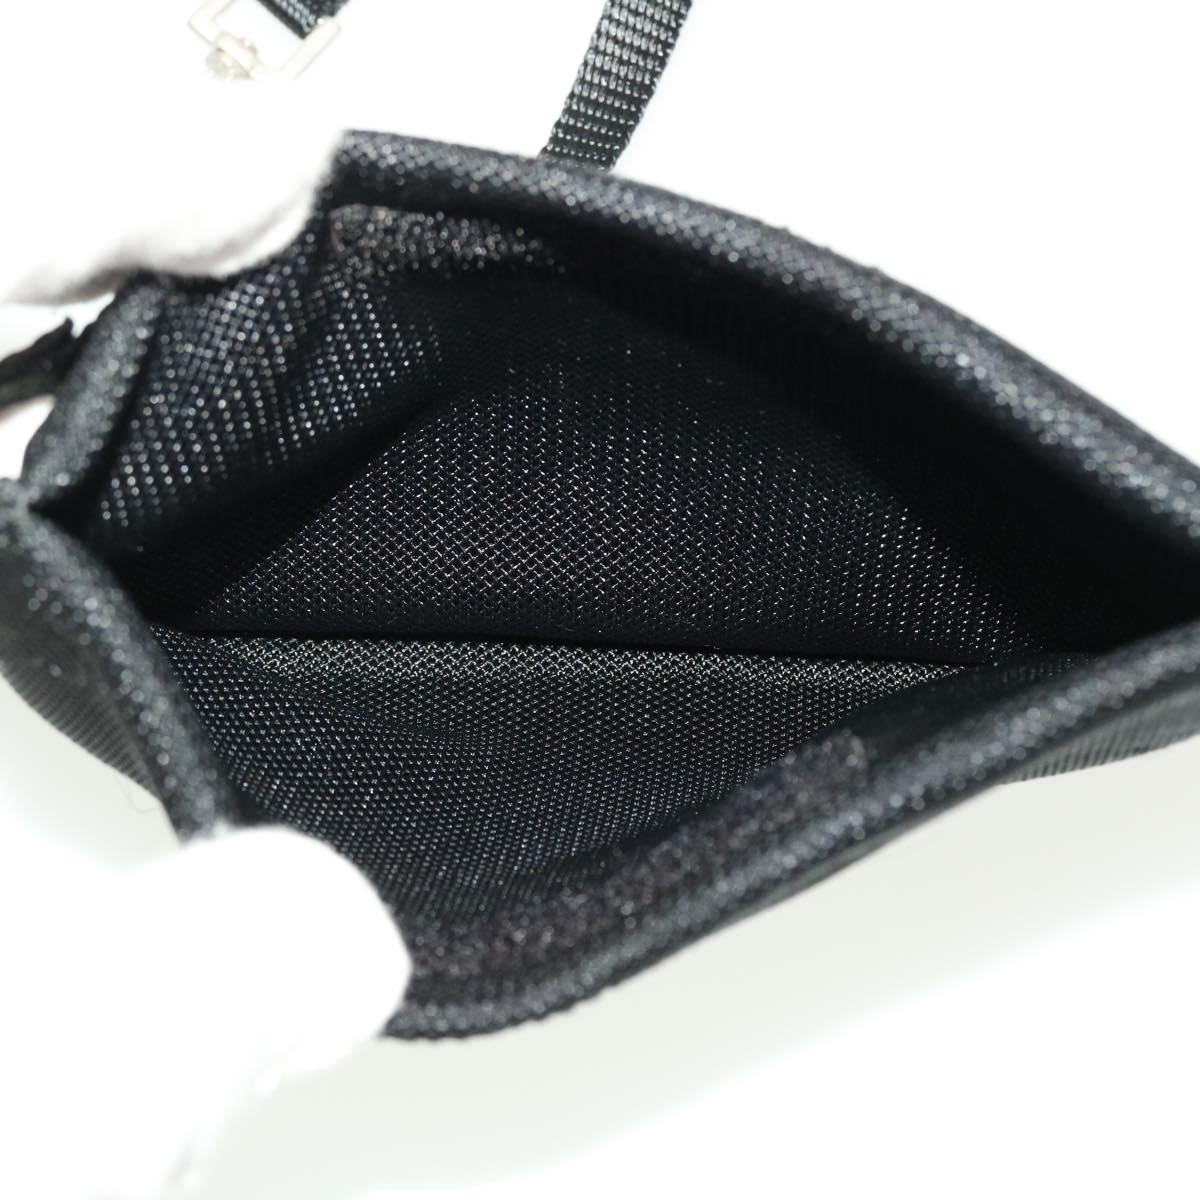 PRADA Shoulder Bag Nylon Pink Black Auth 44511